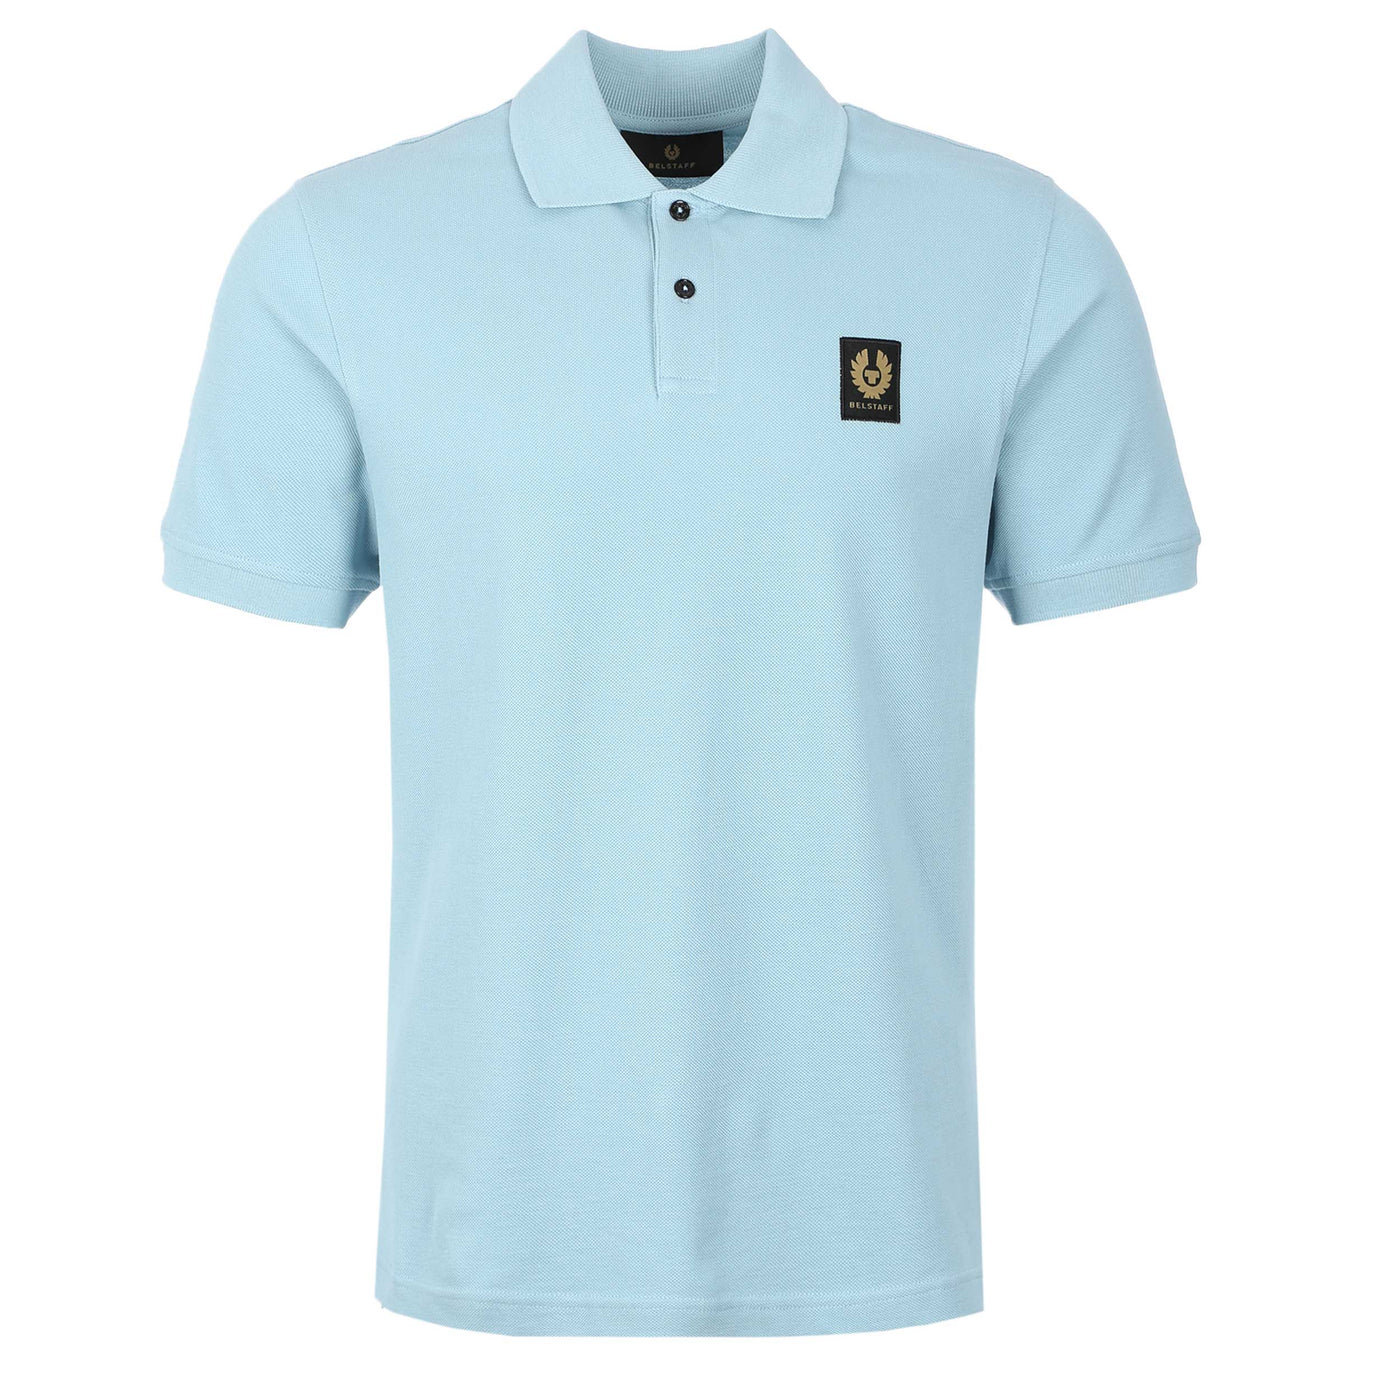 Belstaff Classic Short Sleeve Polo Shirt in Skyline Blue